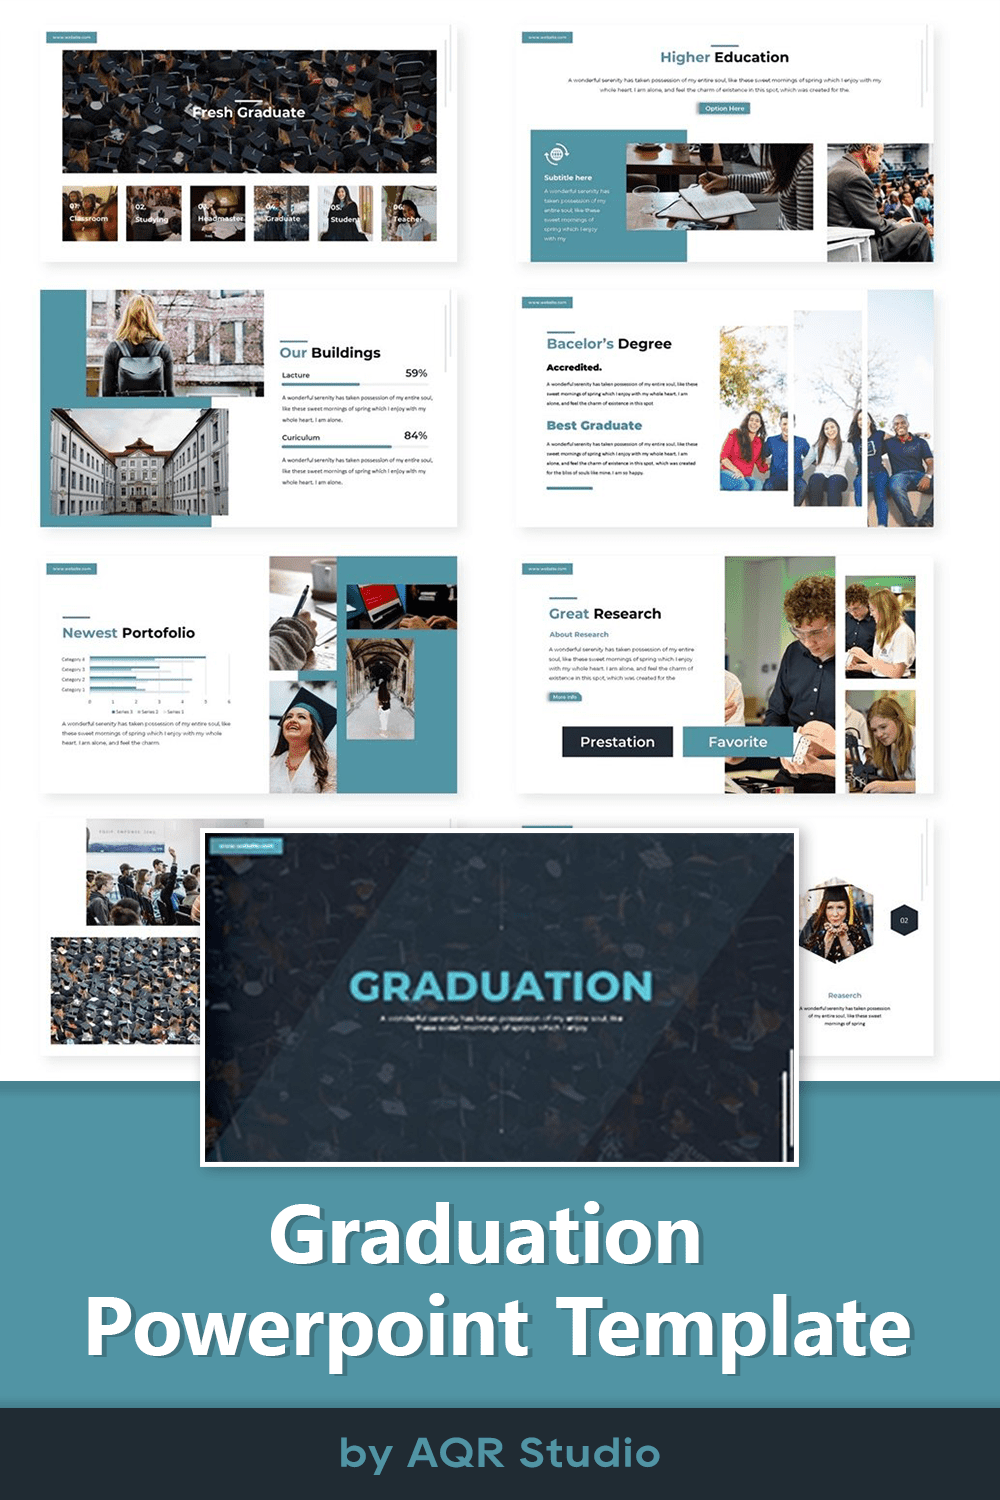 Graduation - PowerPoint Template pinterest image.